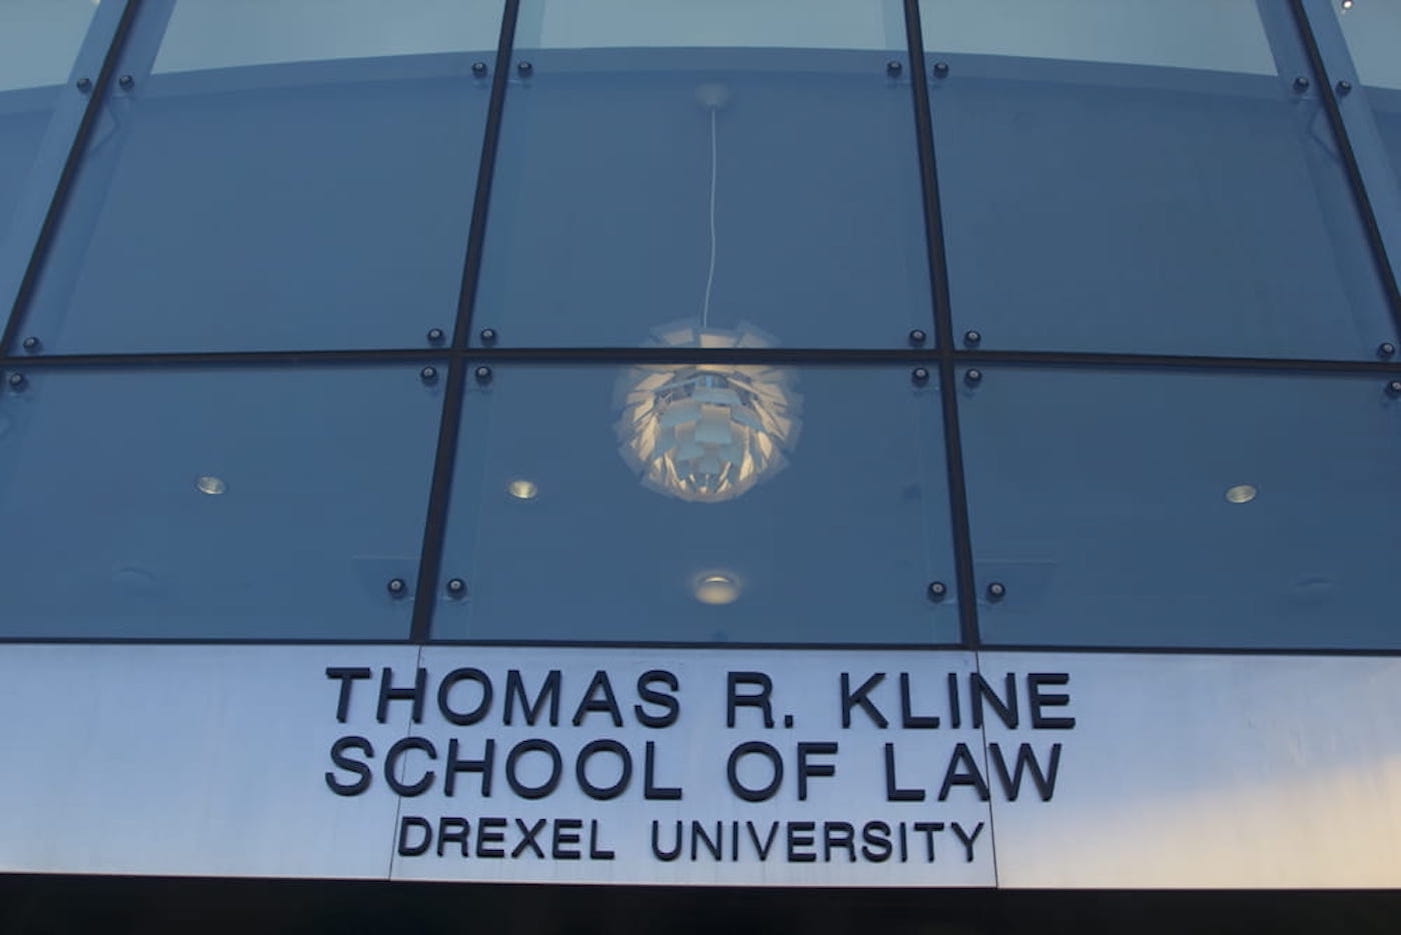 Thomas R. Kline School of Law